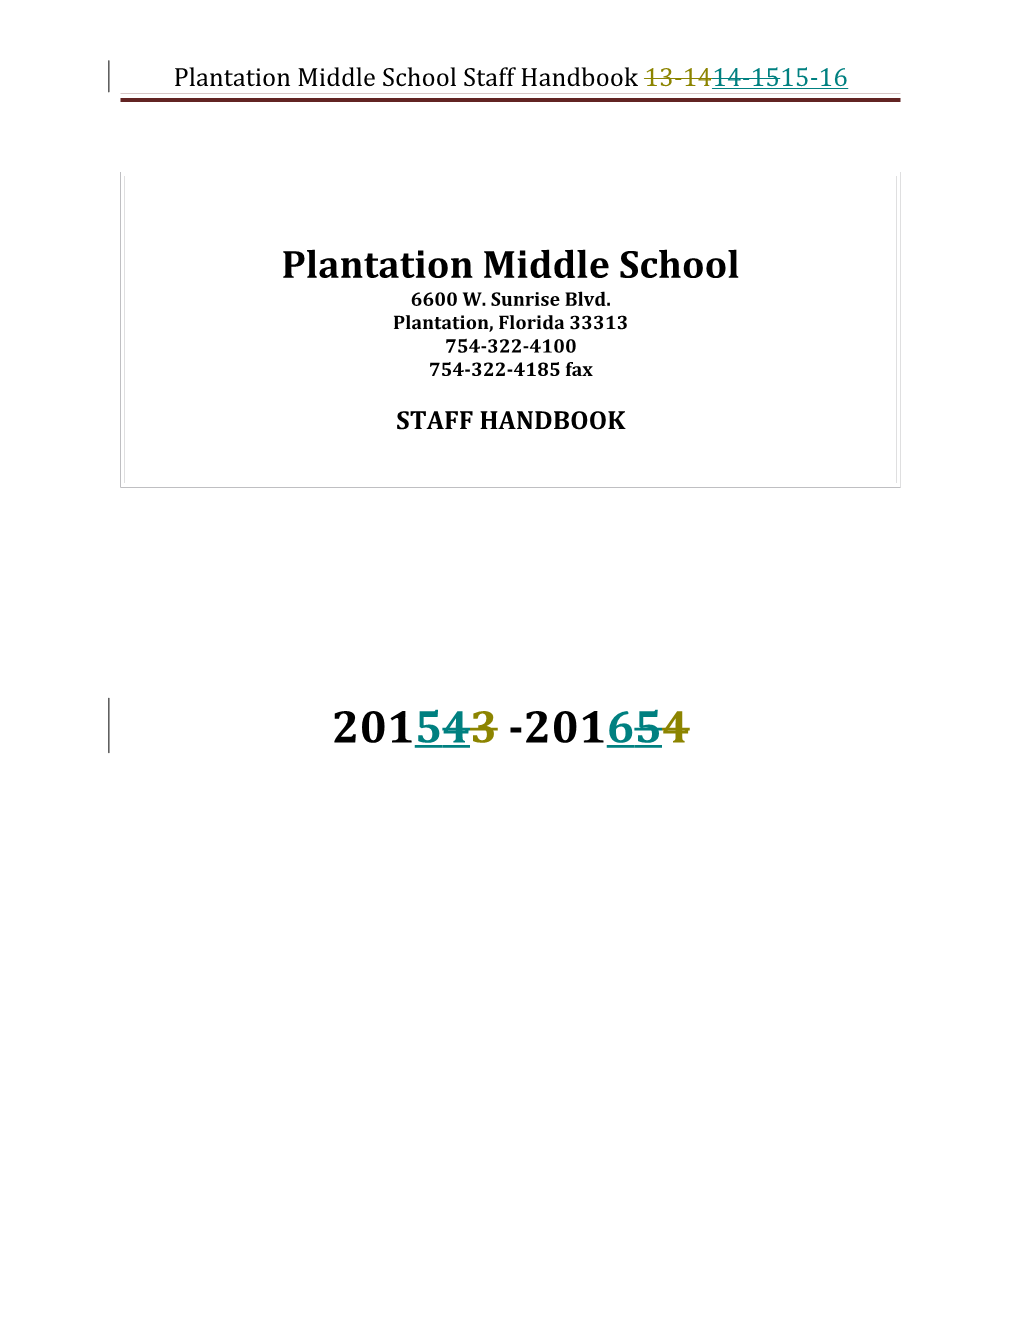 Plantation Middle School Staff Handbook 08-09